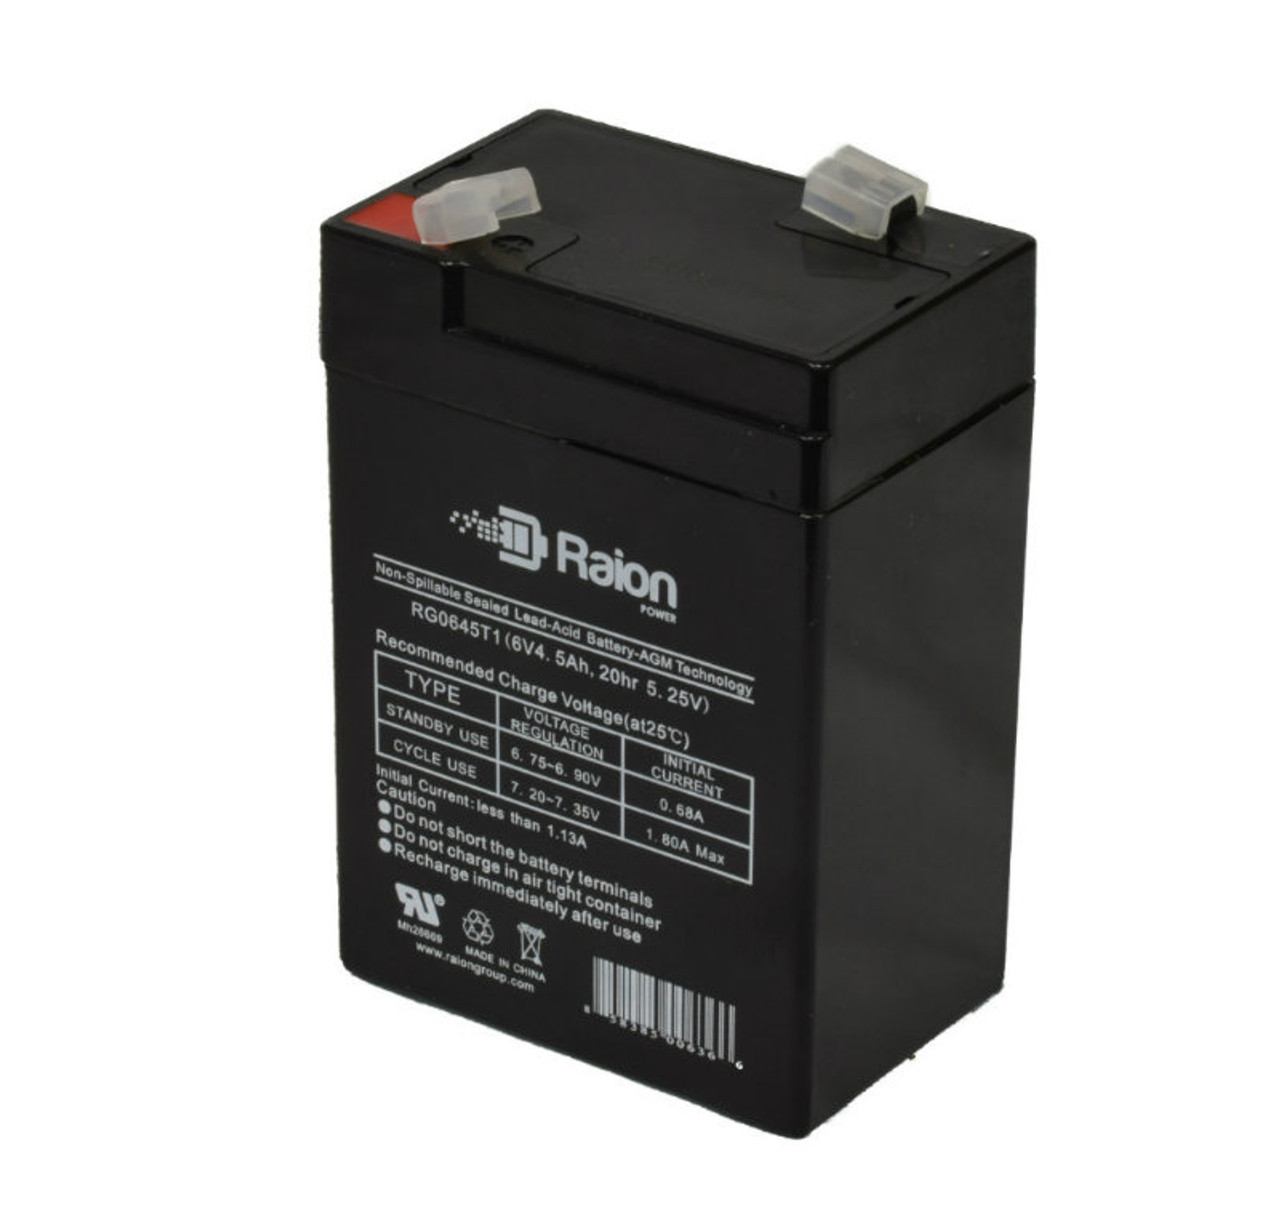 Raion Power RG0645T1 6V 4.5Ah Replacement Battery Cartridge for Sonnenschein NGA51204D2HSOSA